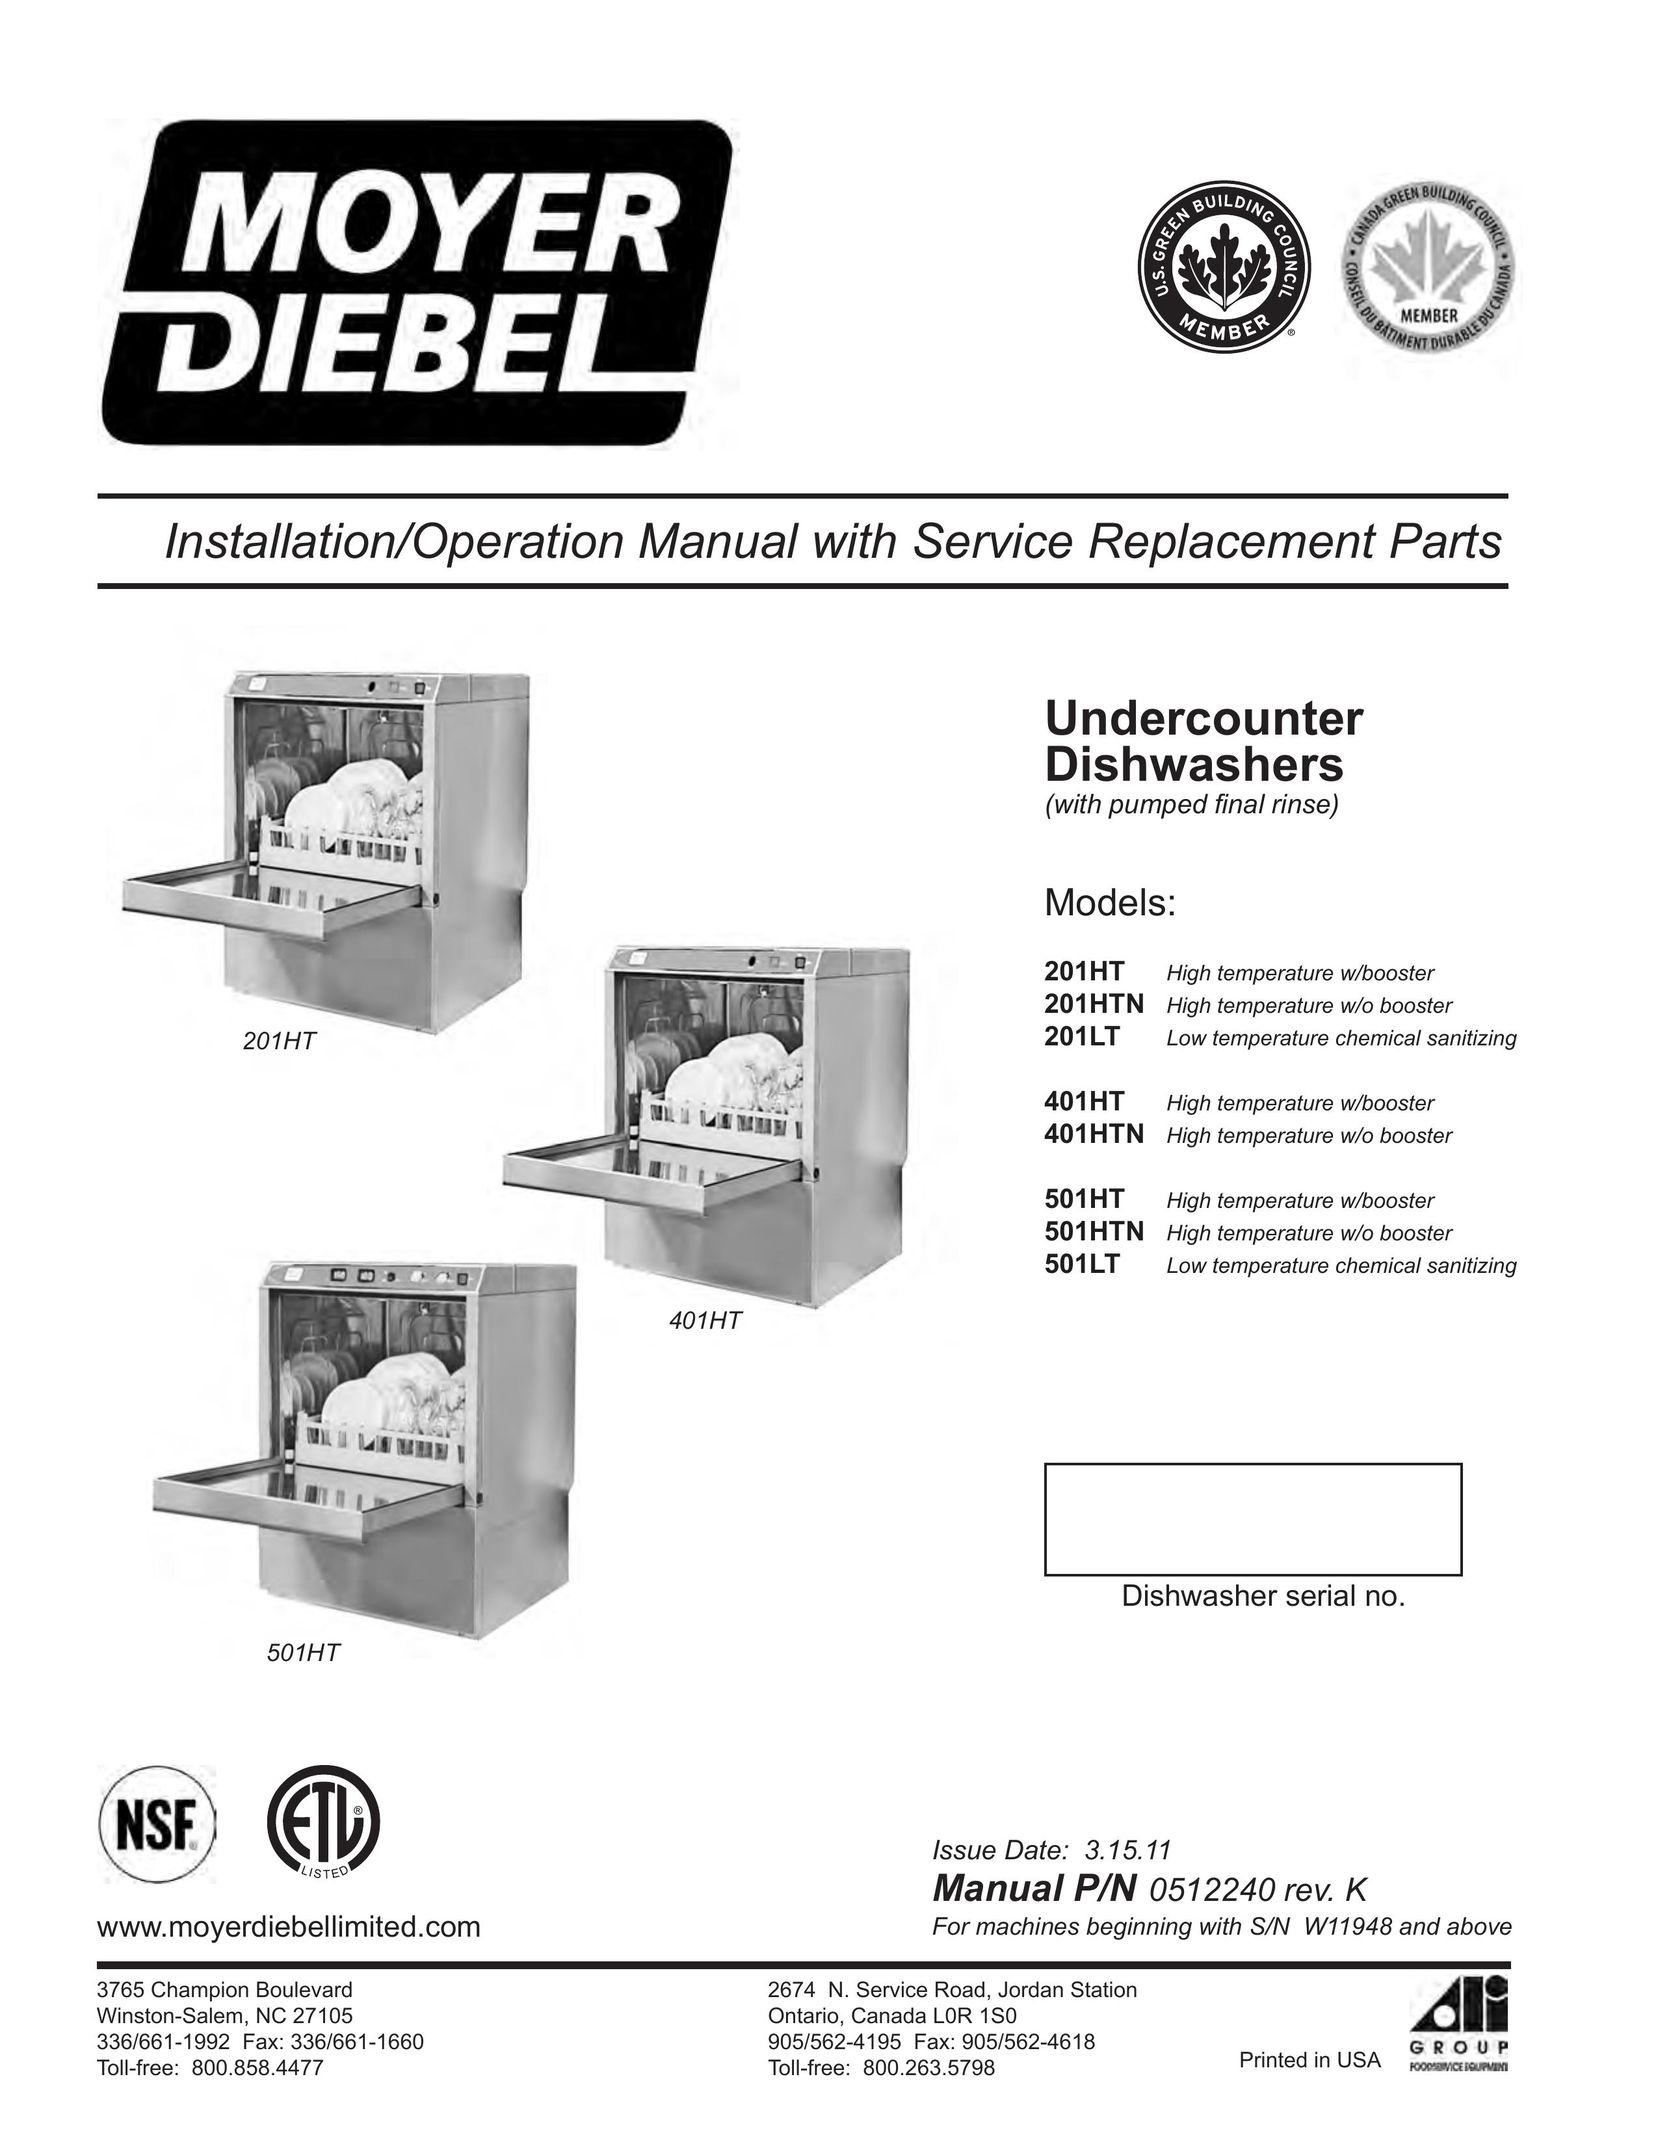 Moyer Diebel 501LT Dishwasher User Manual